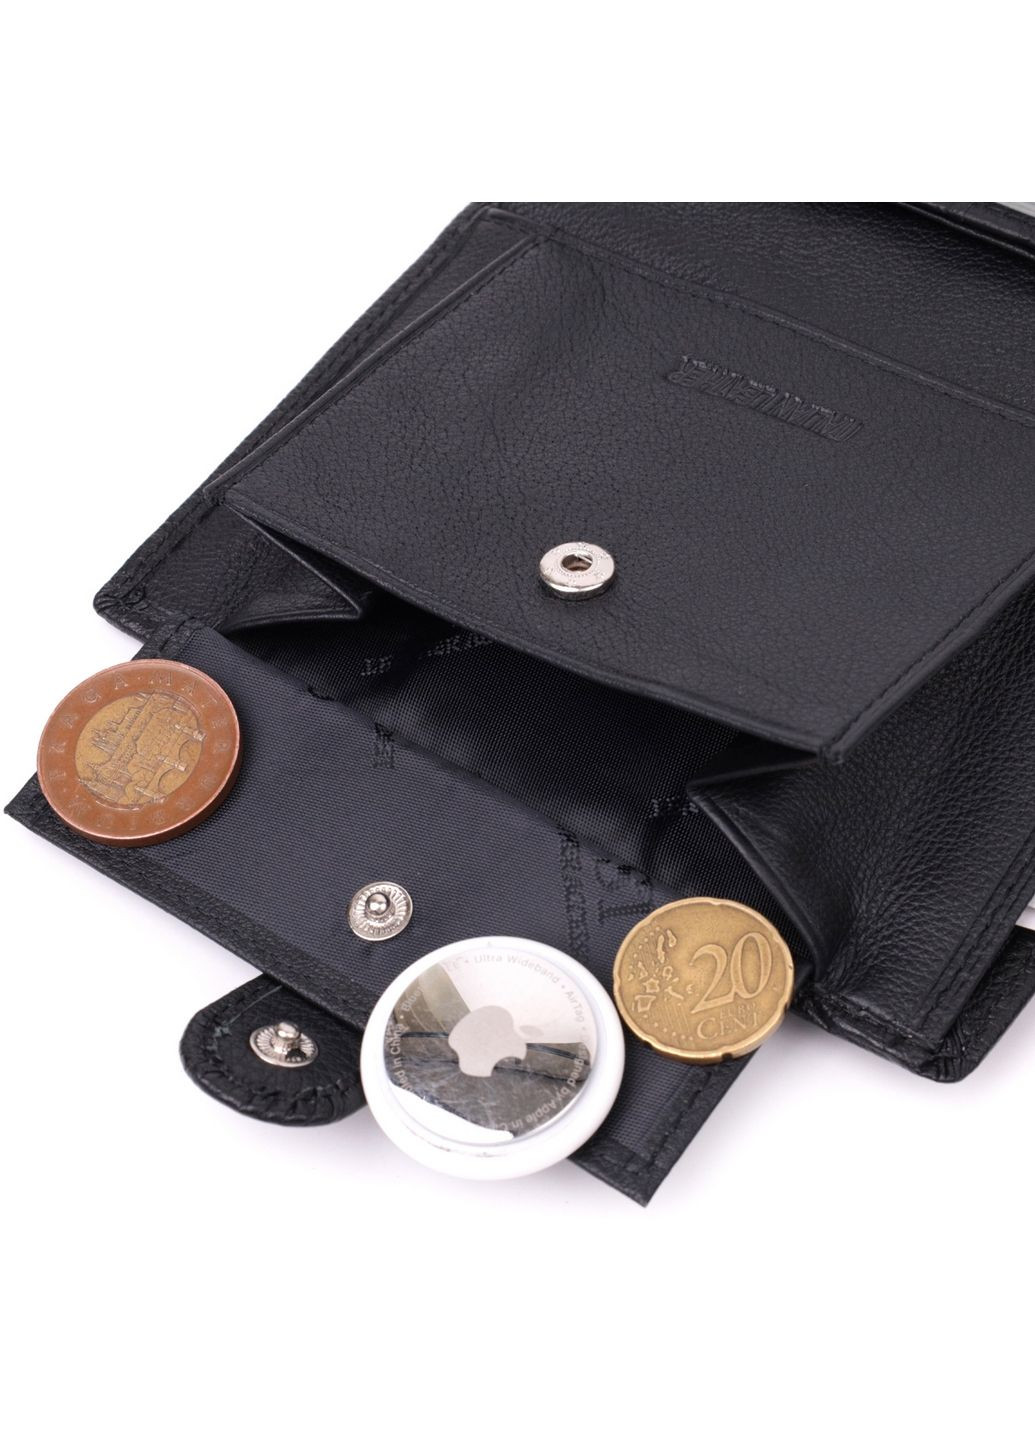 Мужской кожаный бумажник 10,5х14х2 см st leather (288046819)